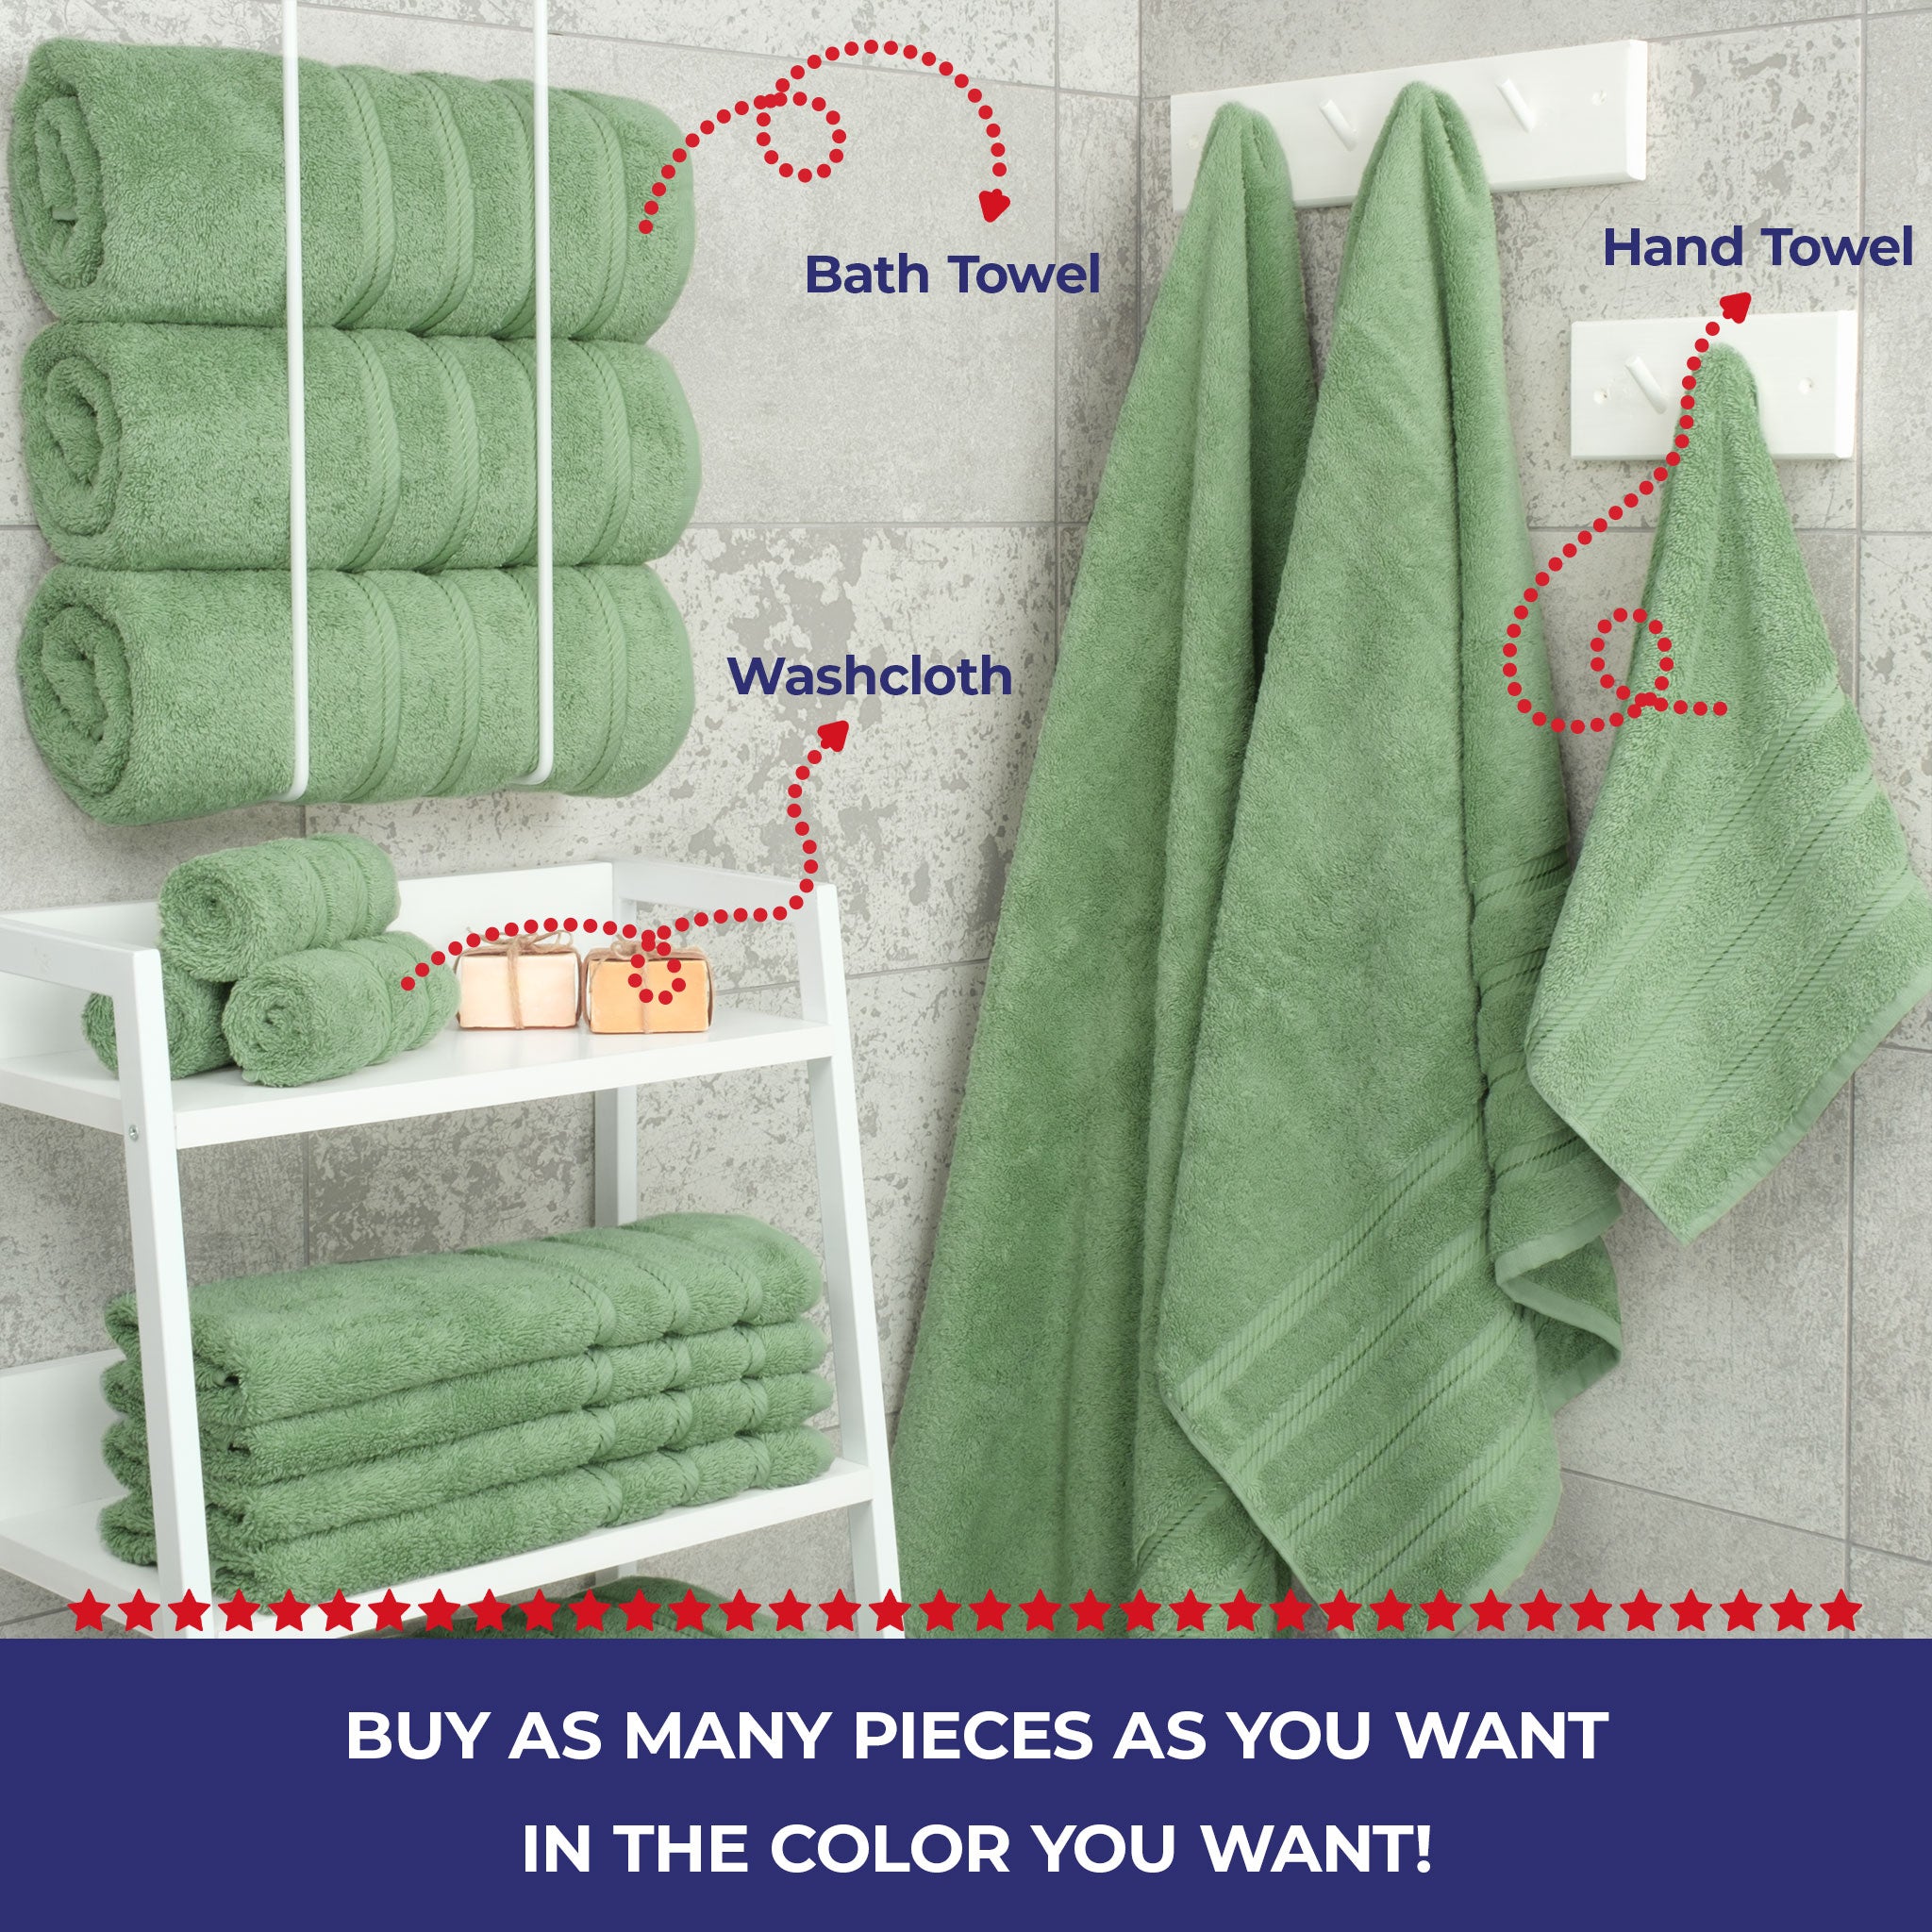 American Soft Linen - Single Piece Turkish Cotton Bath Towels - Sage-Green - 4